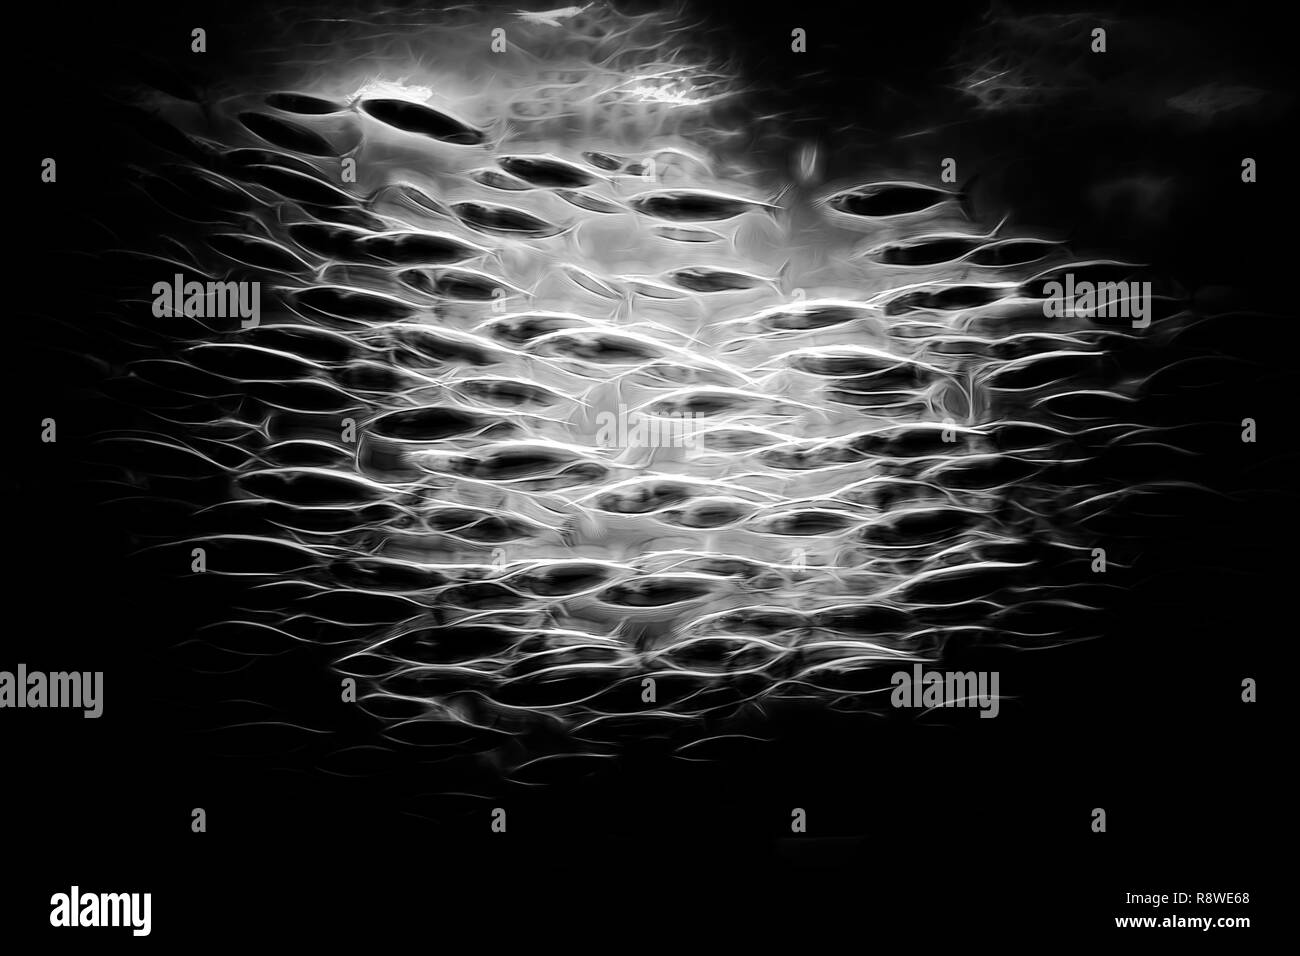 Digital abstract shoal of fish. Stock Photo